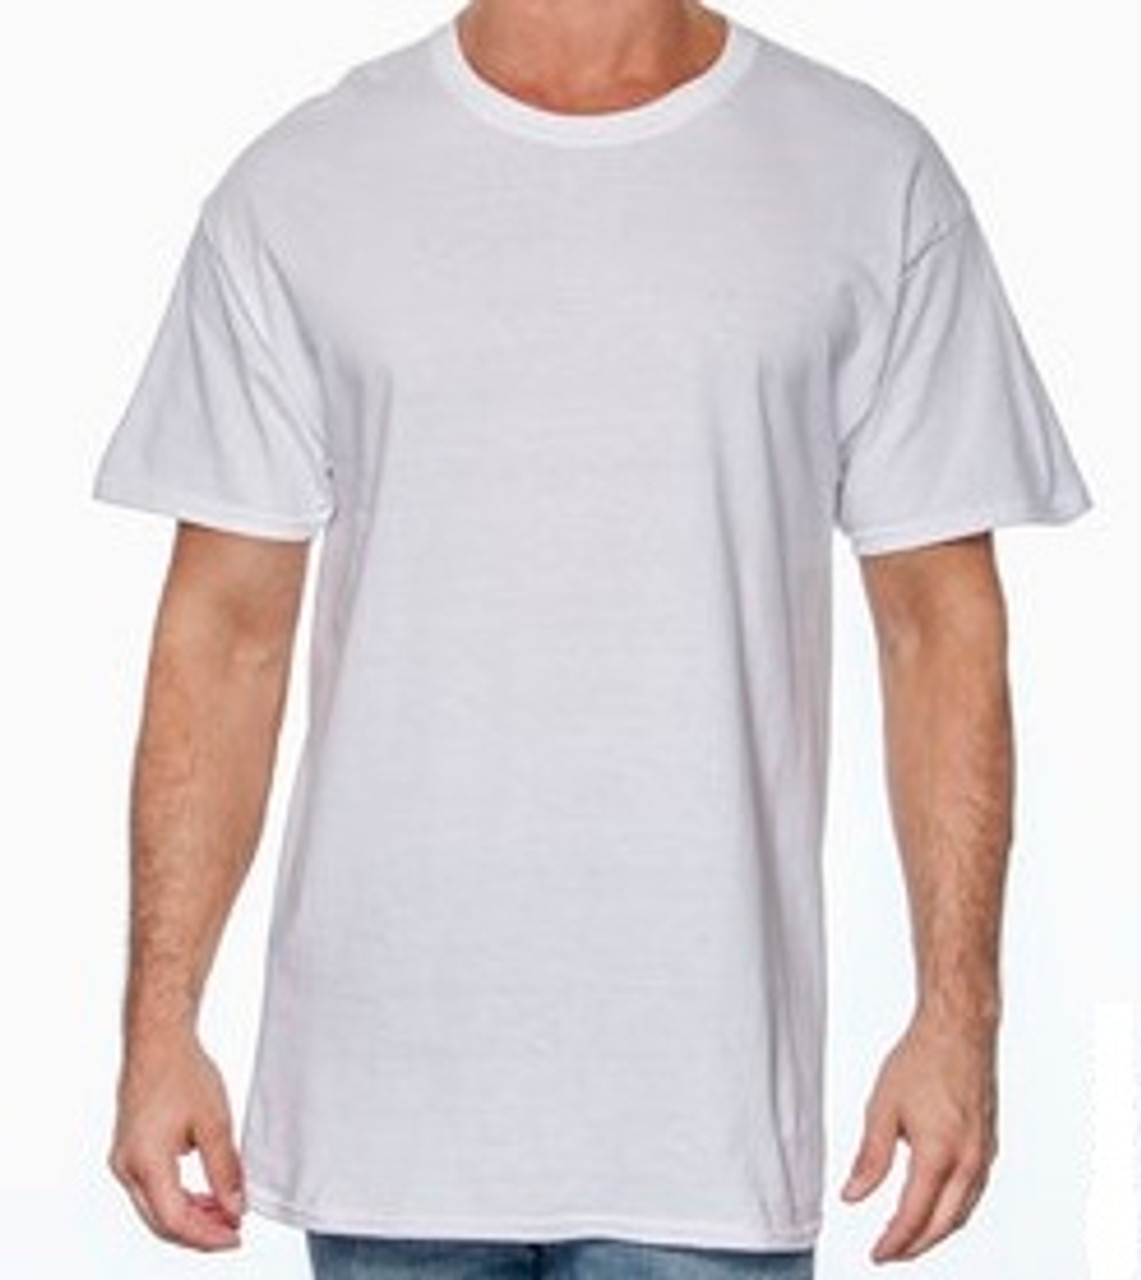 Small - Adult - White - Gildan - Custom T-shirt